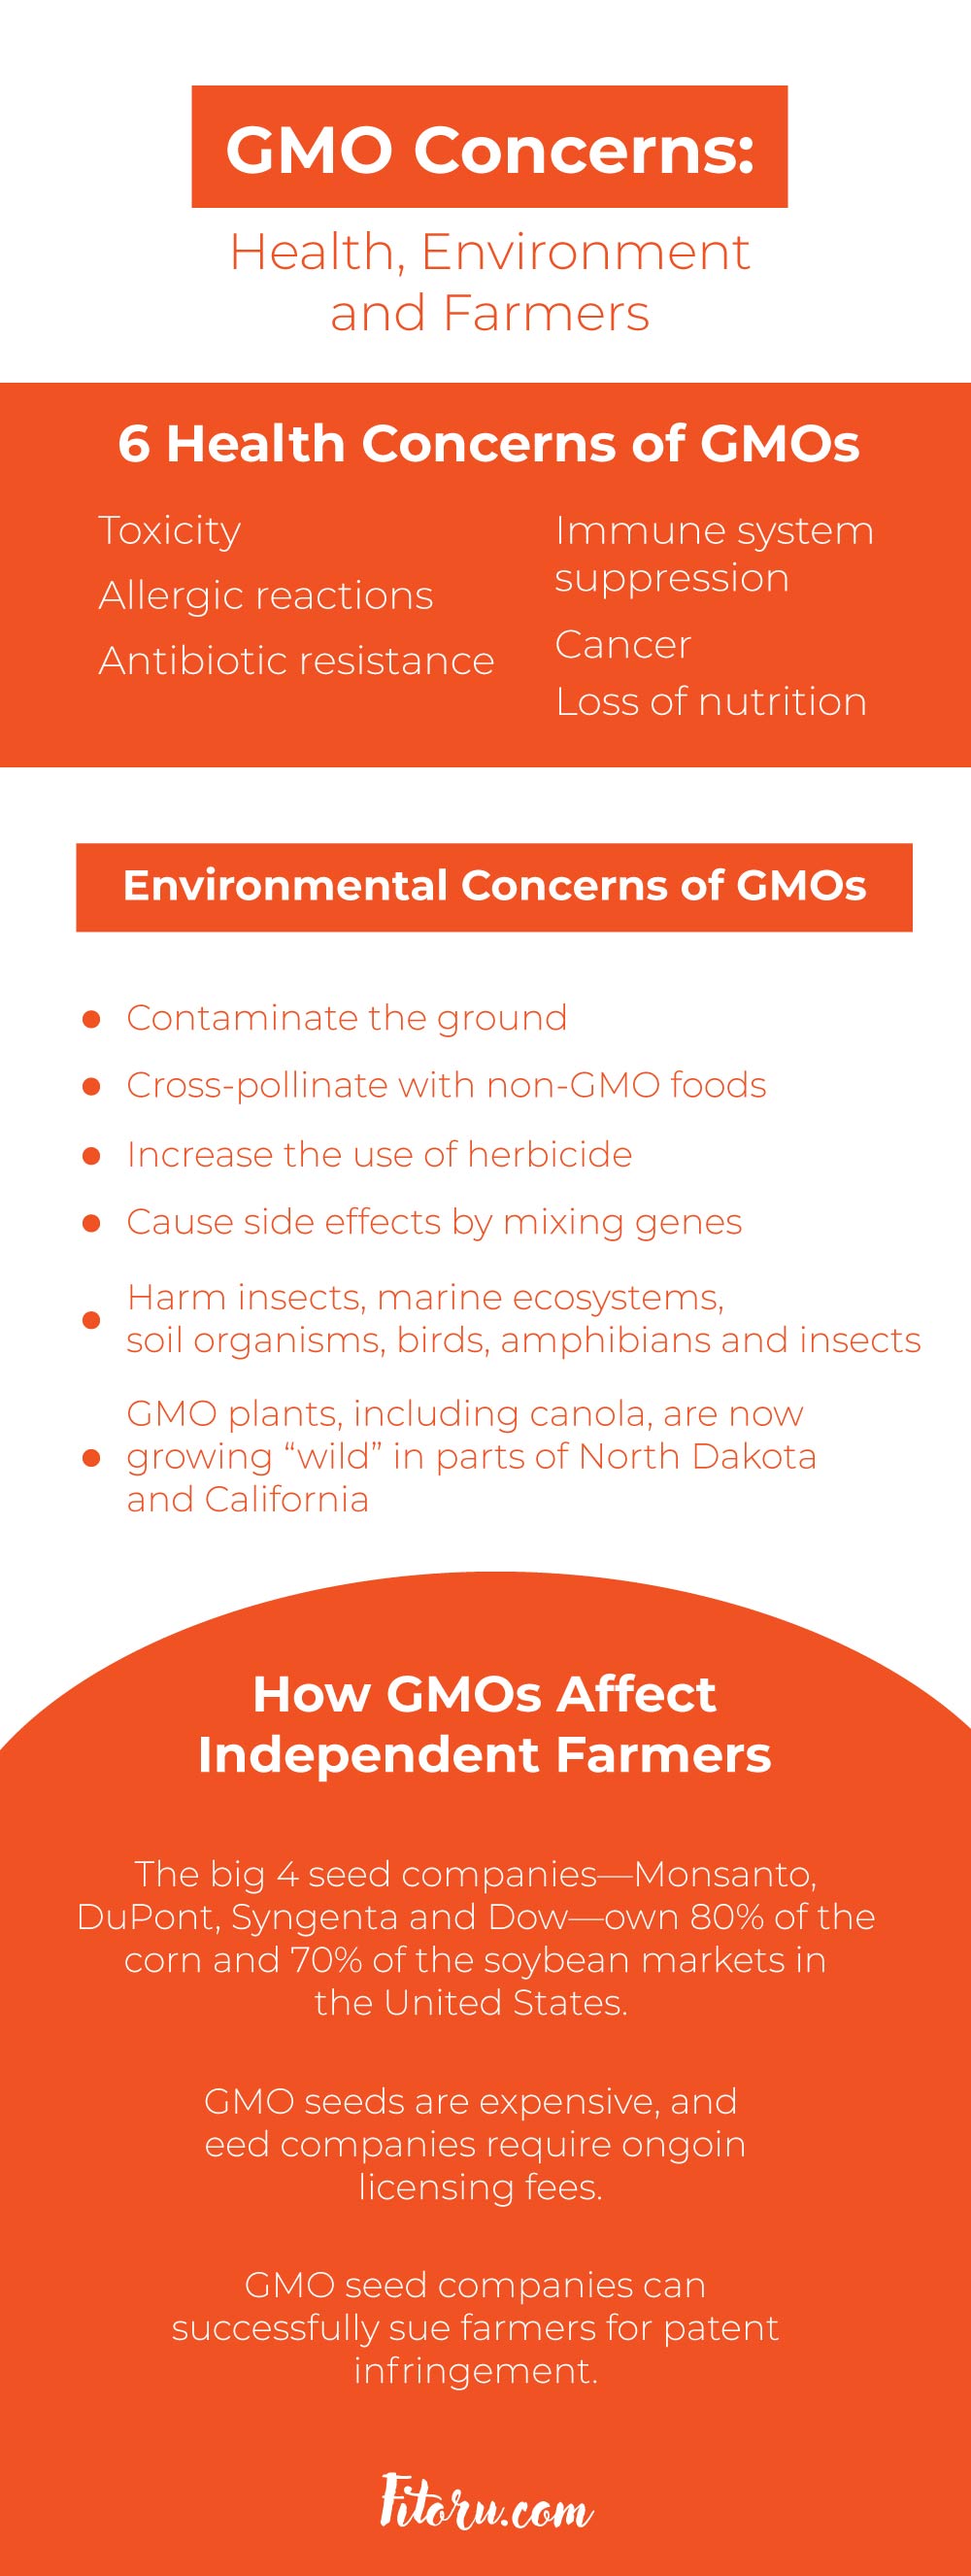 GMO Concerns: Health, Environment and Farmers